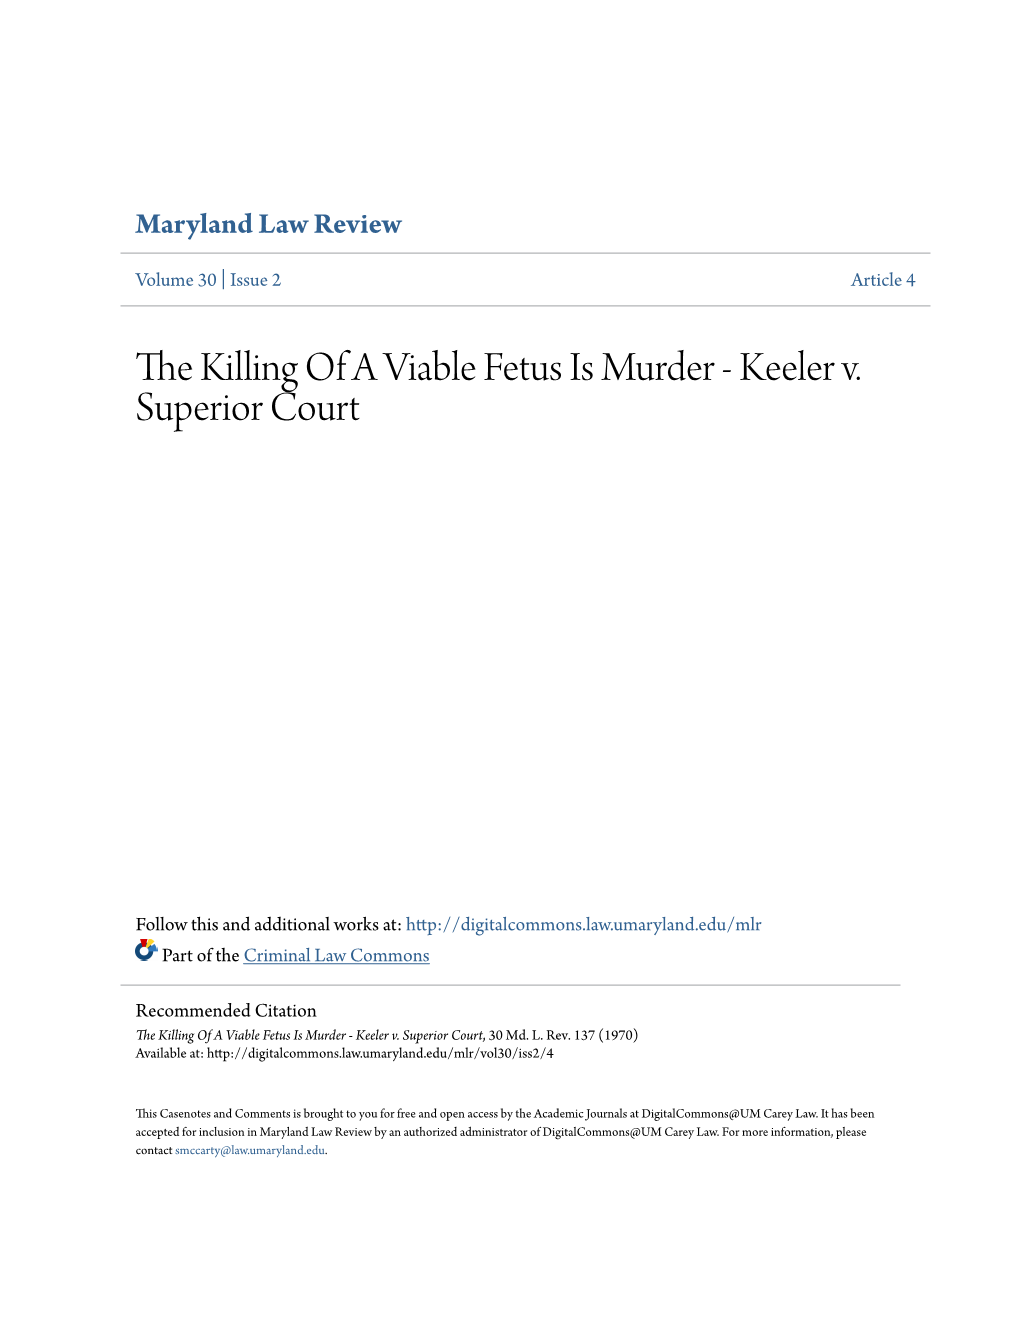 The Killing of a Viable Fetus Is Murder - Keeler V